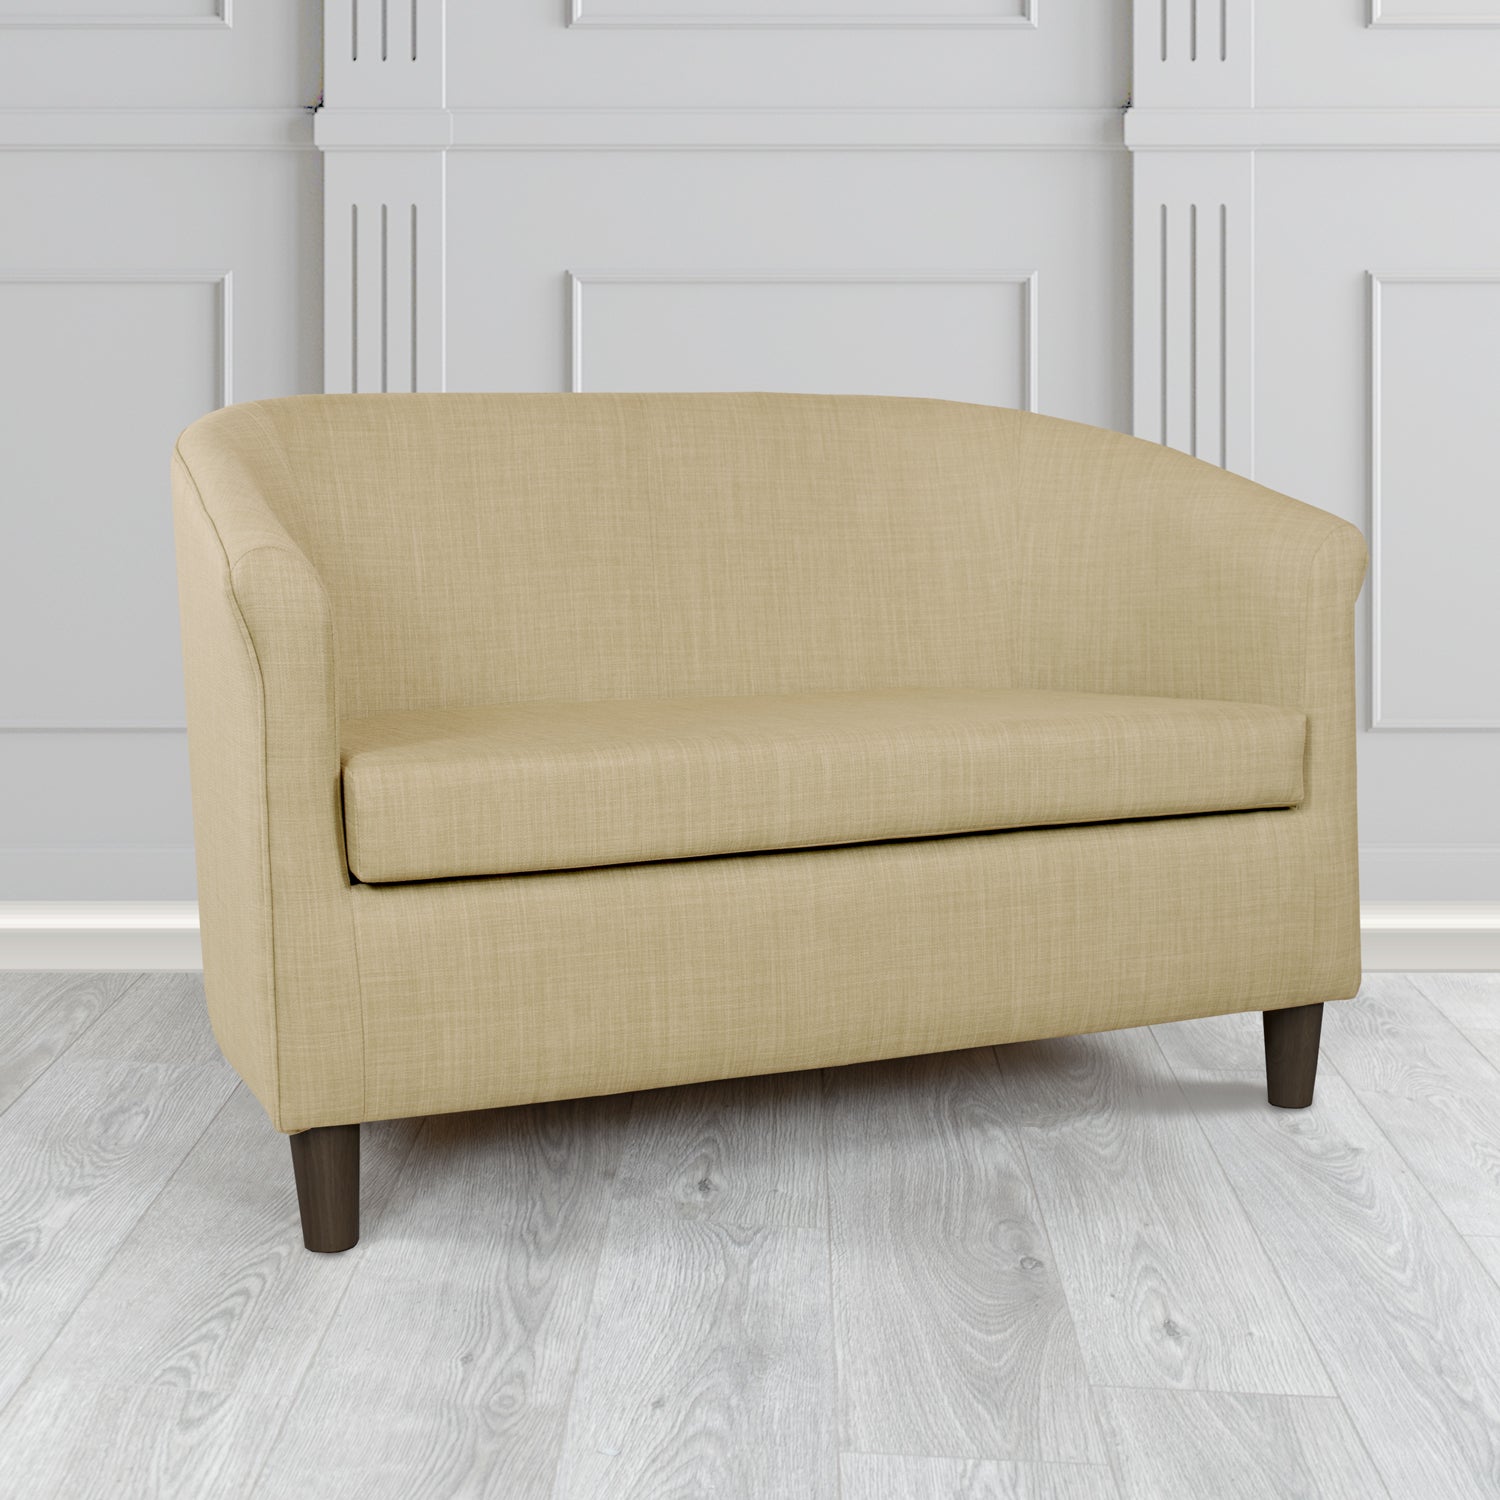 Tuscany Charles Mink Plain Linen Fabric 2 Seater Tub Sofa - The Tub Chair Shop